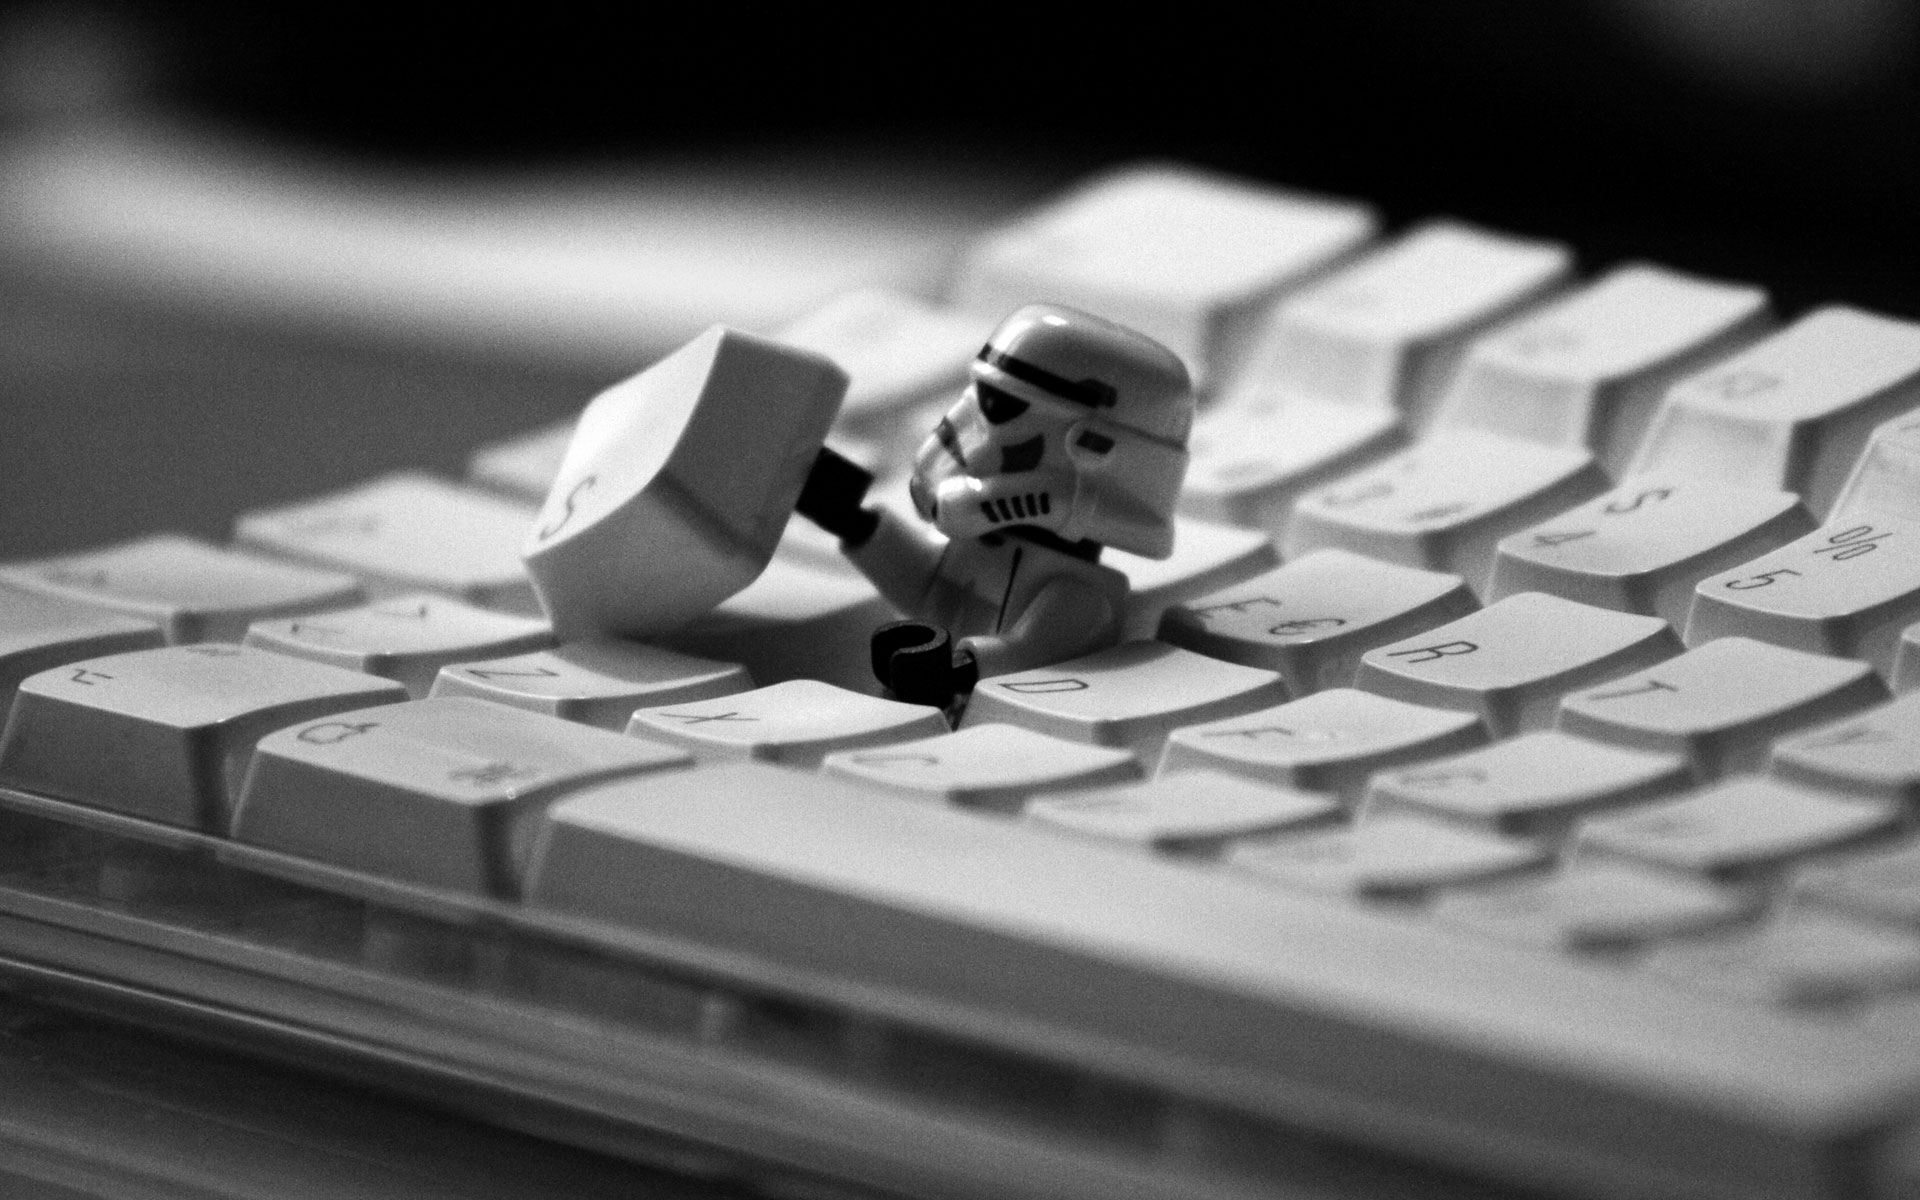 lego, keyboard, stormtrooper, products, star wars